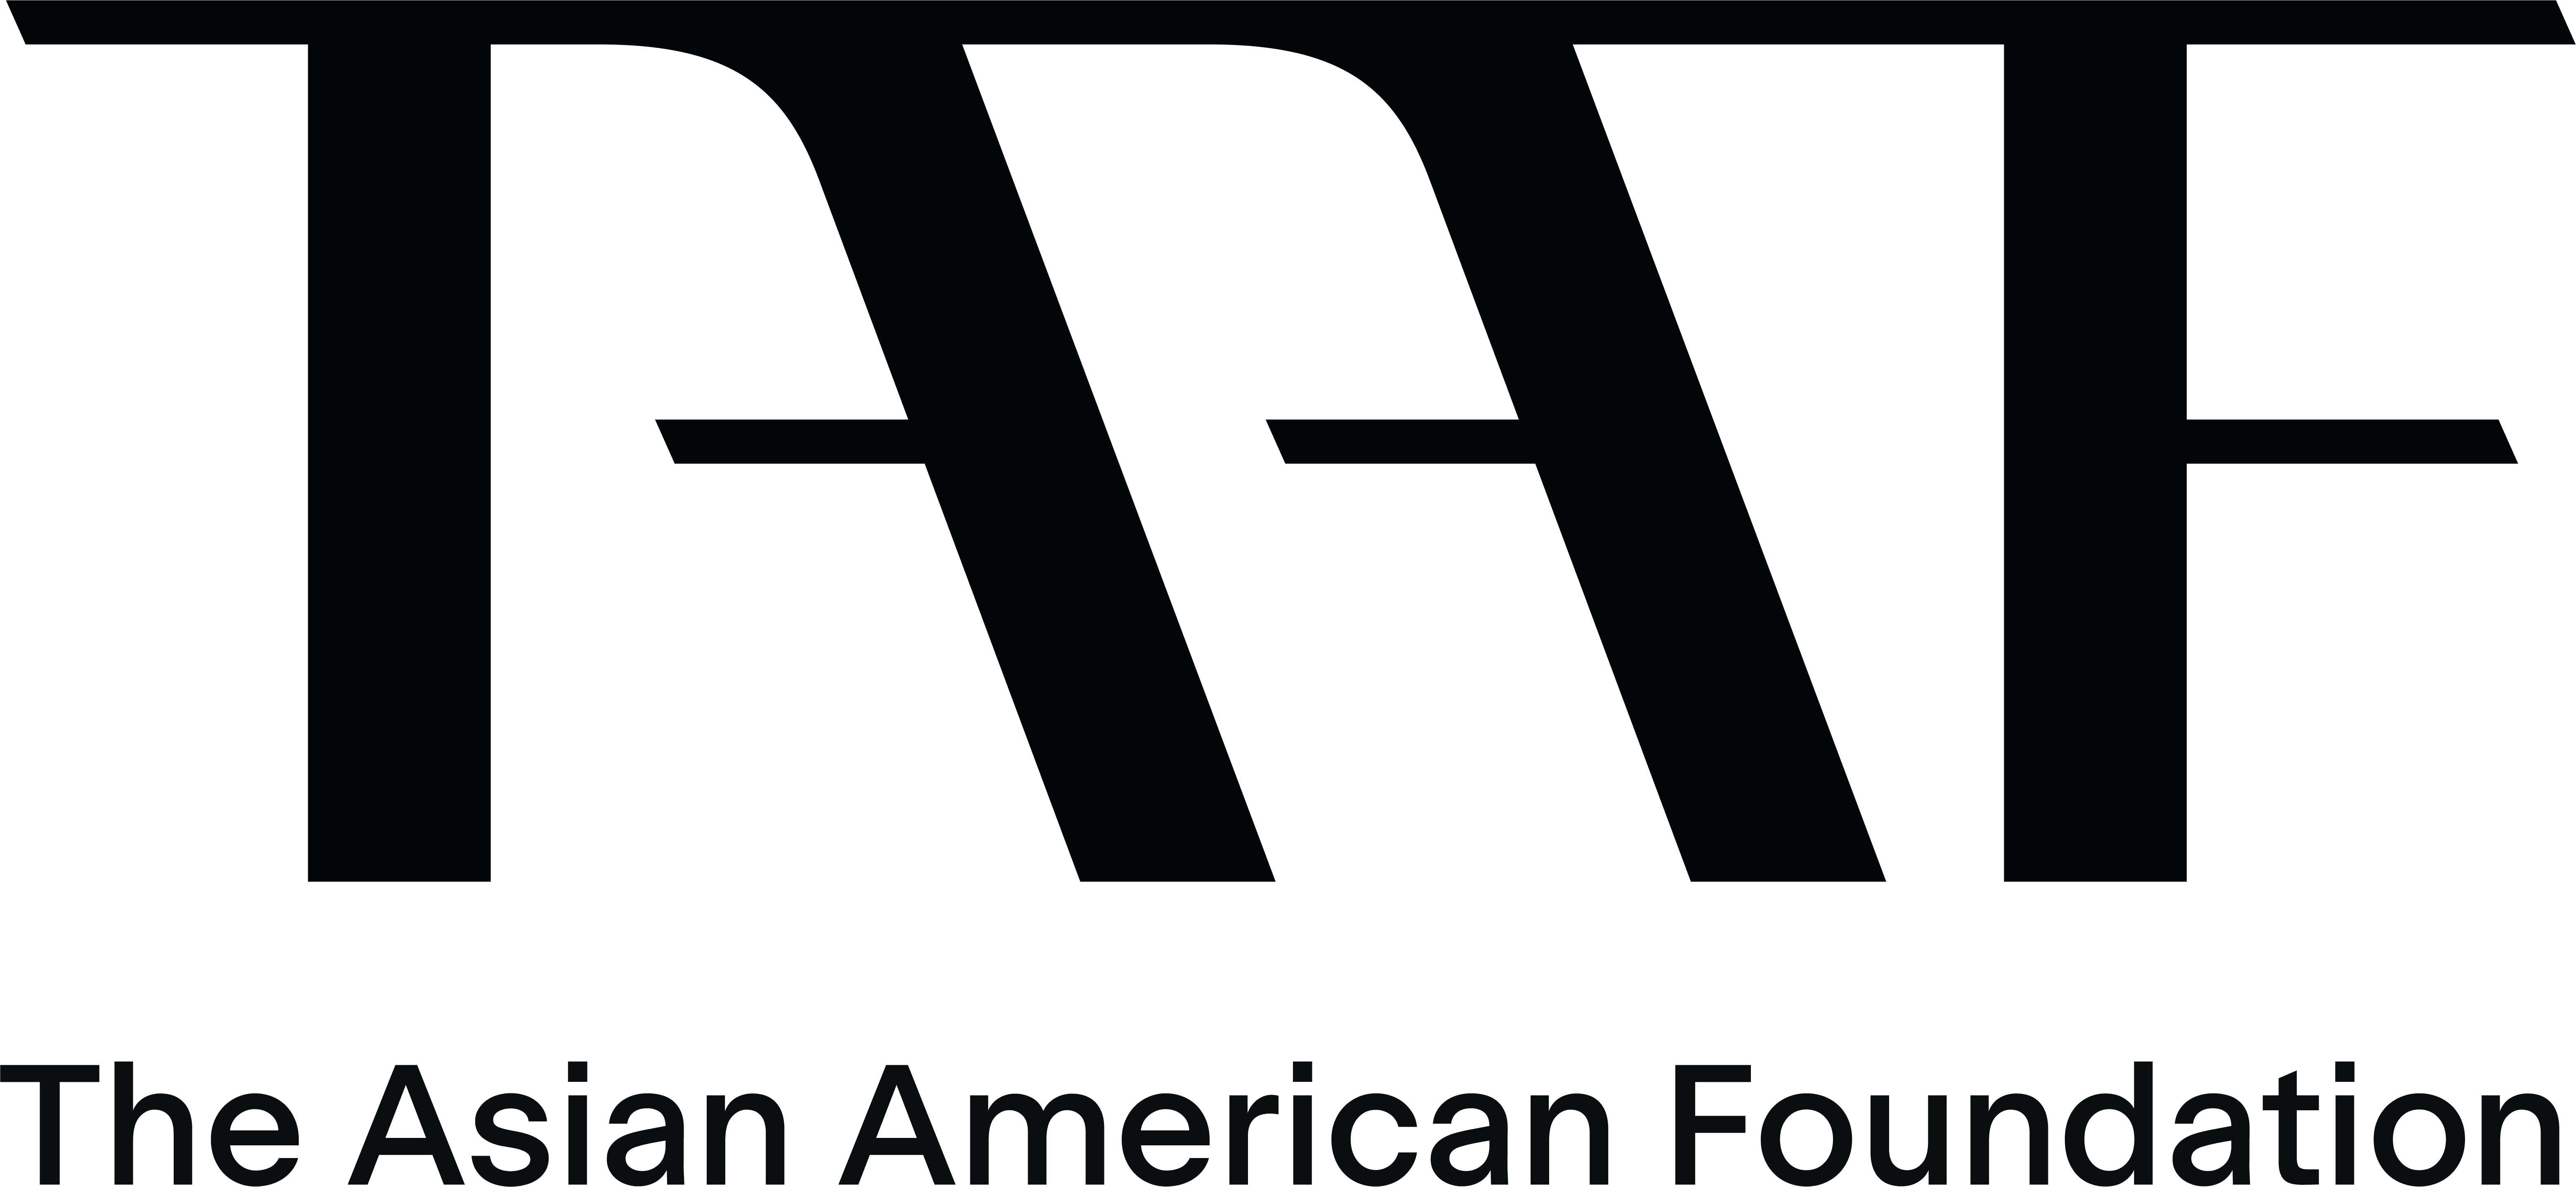 The Asian American Foundation logo